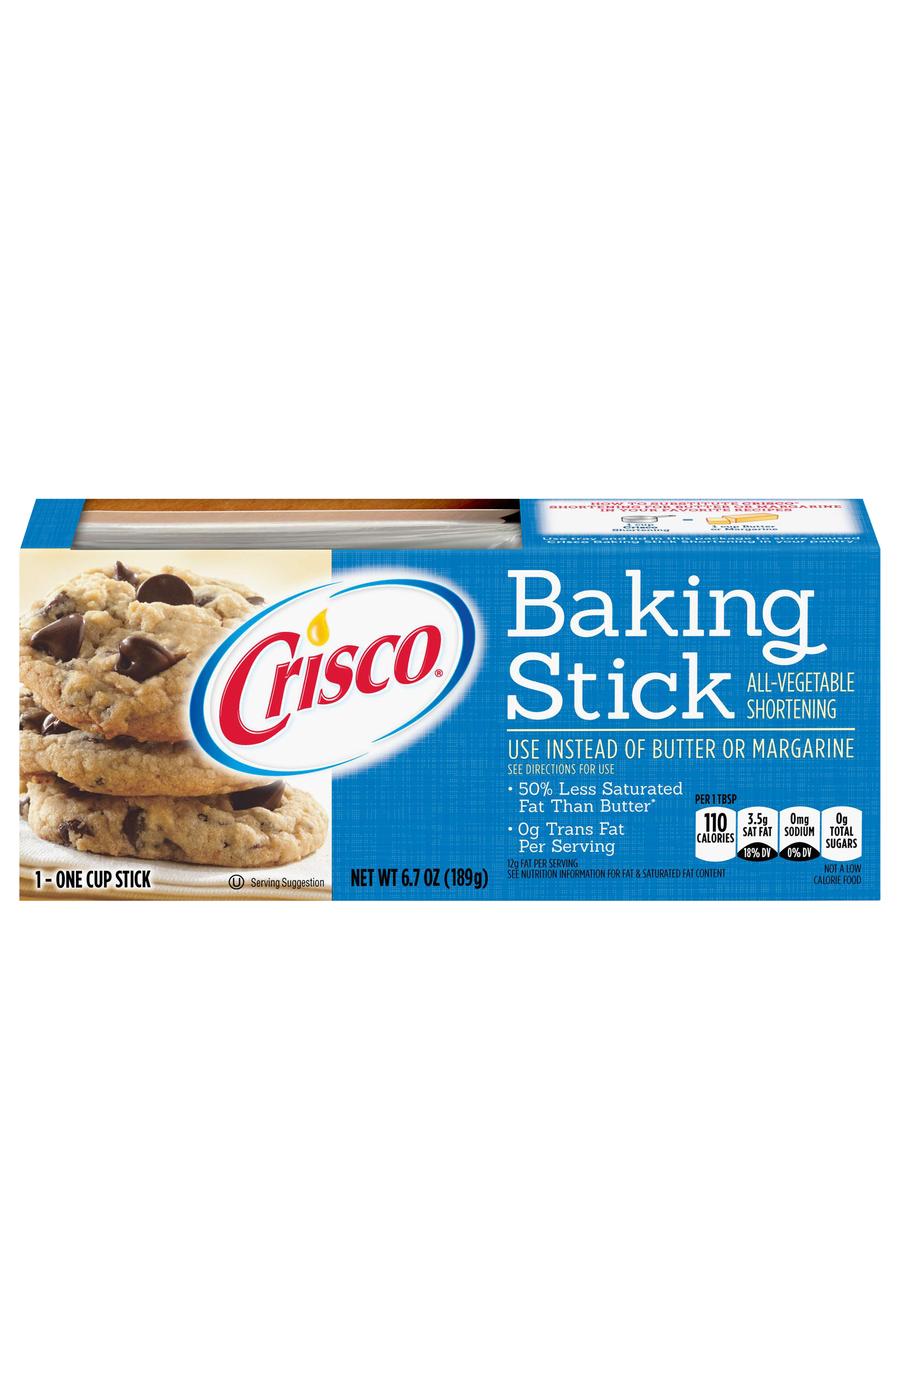 Crisco Baking Stick Original All-Vegetable Shortening; image 1 of 2